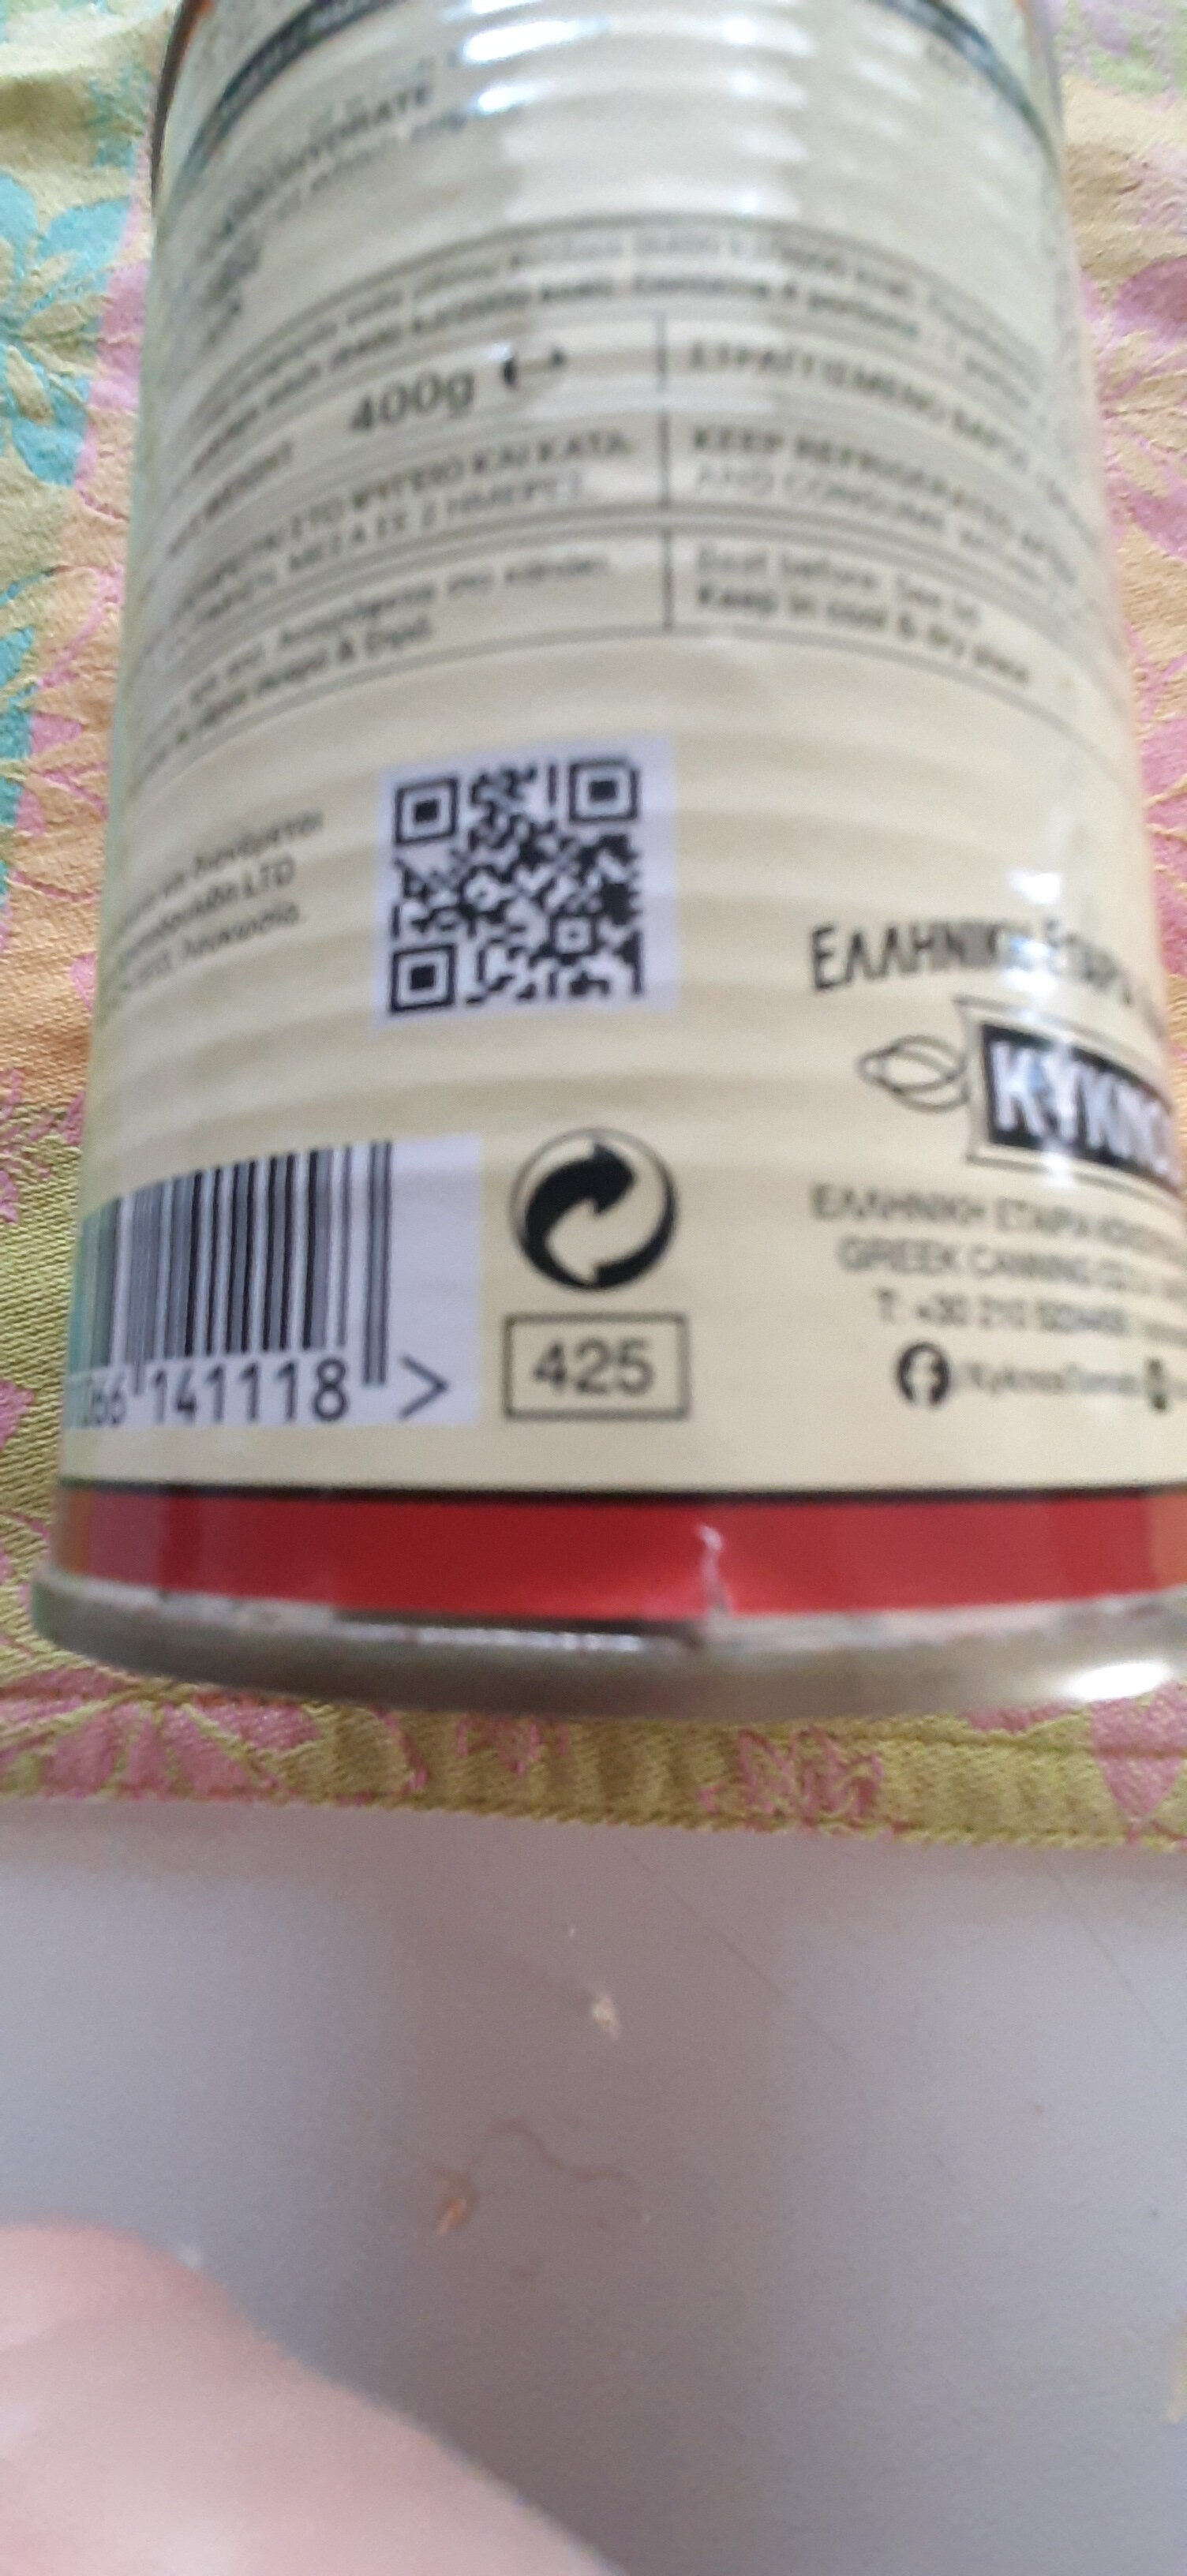 Red kidney bean - Instruction de recyclage et/ou informations d'emballage